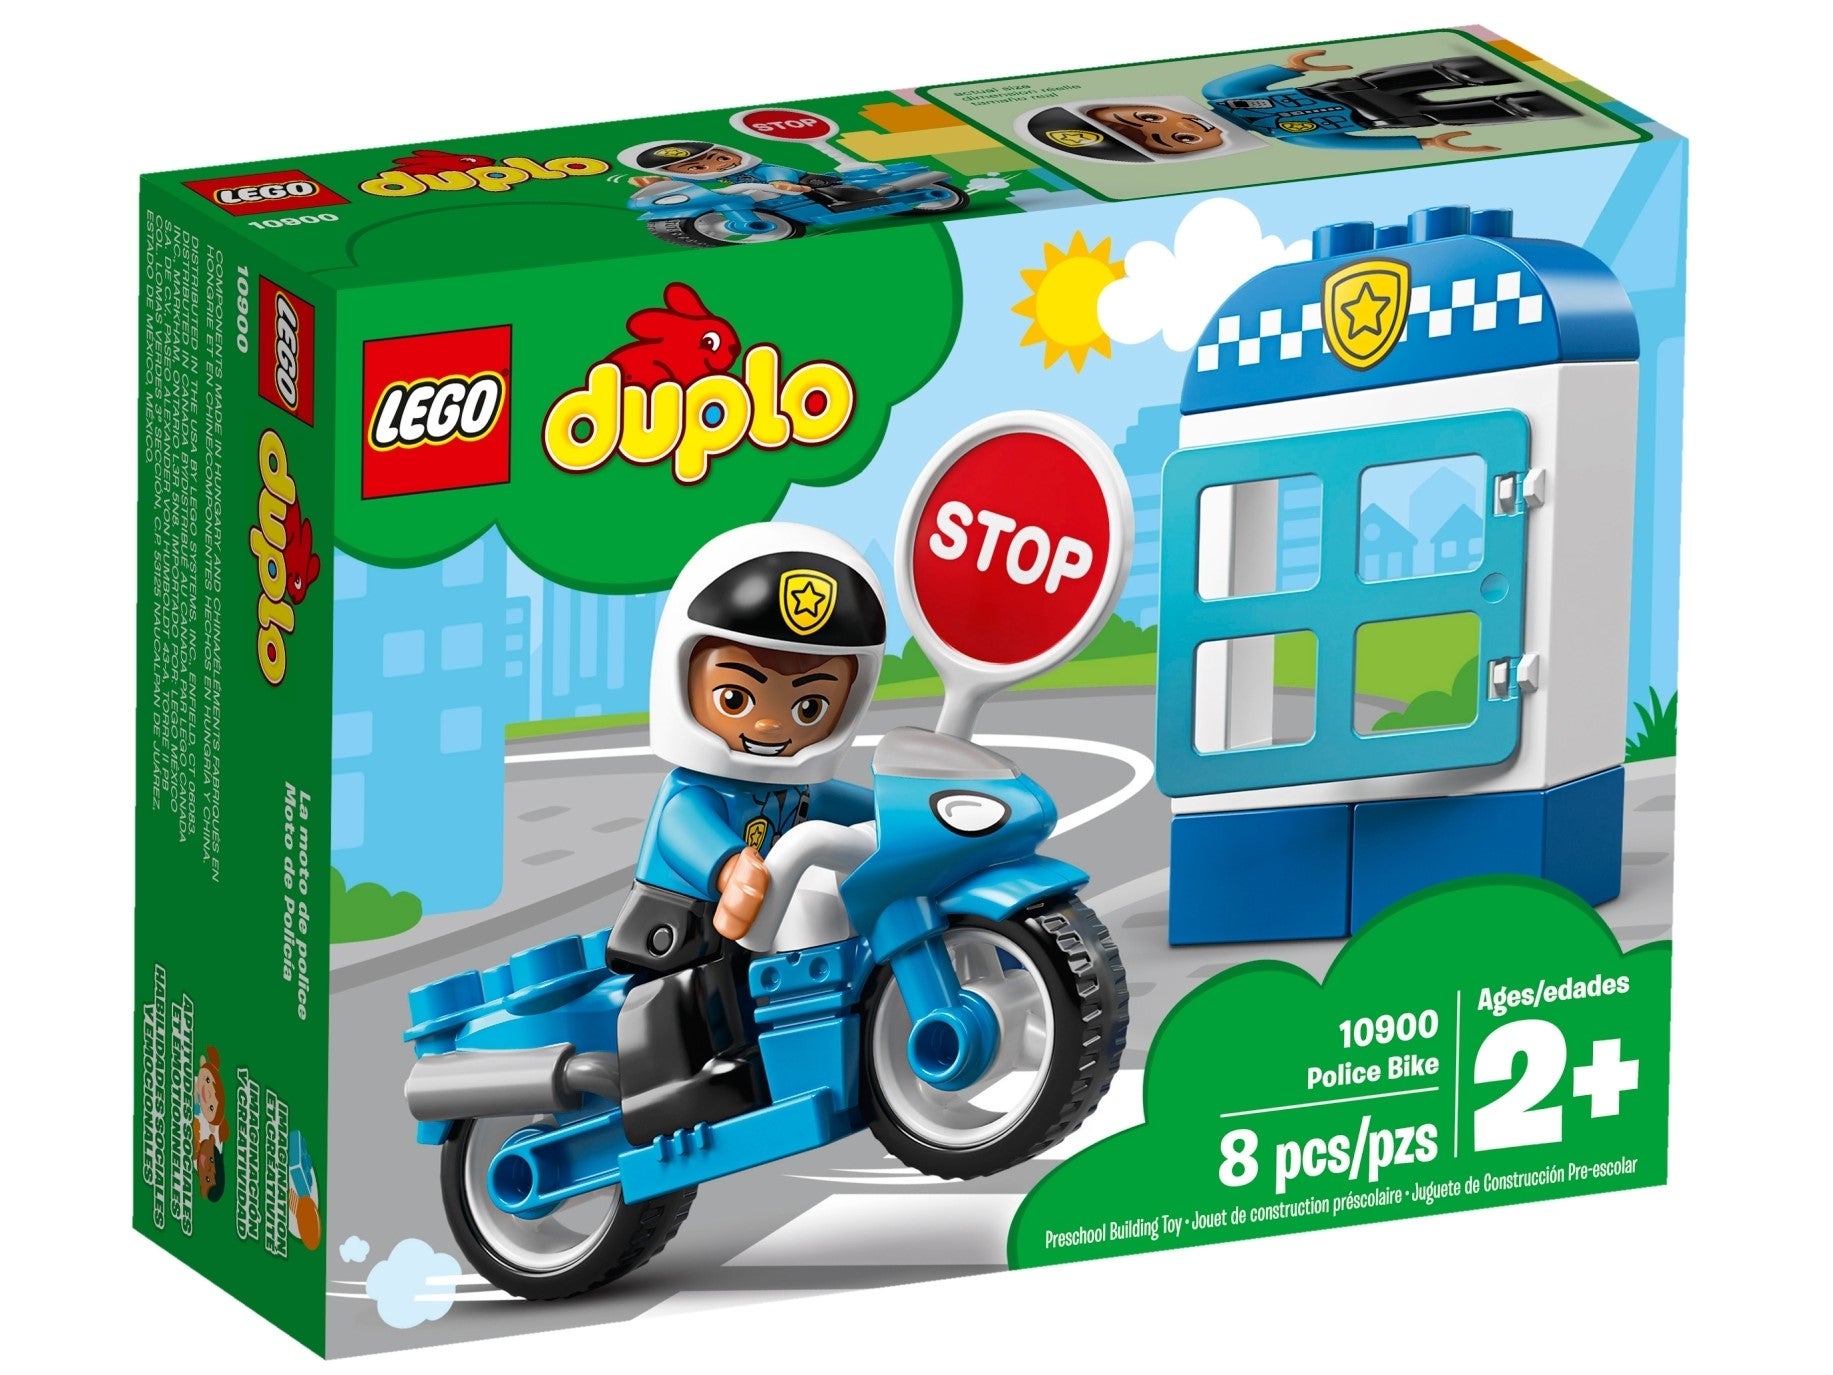 LEGO DUPLO 10900 Police Bike Kids Set